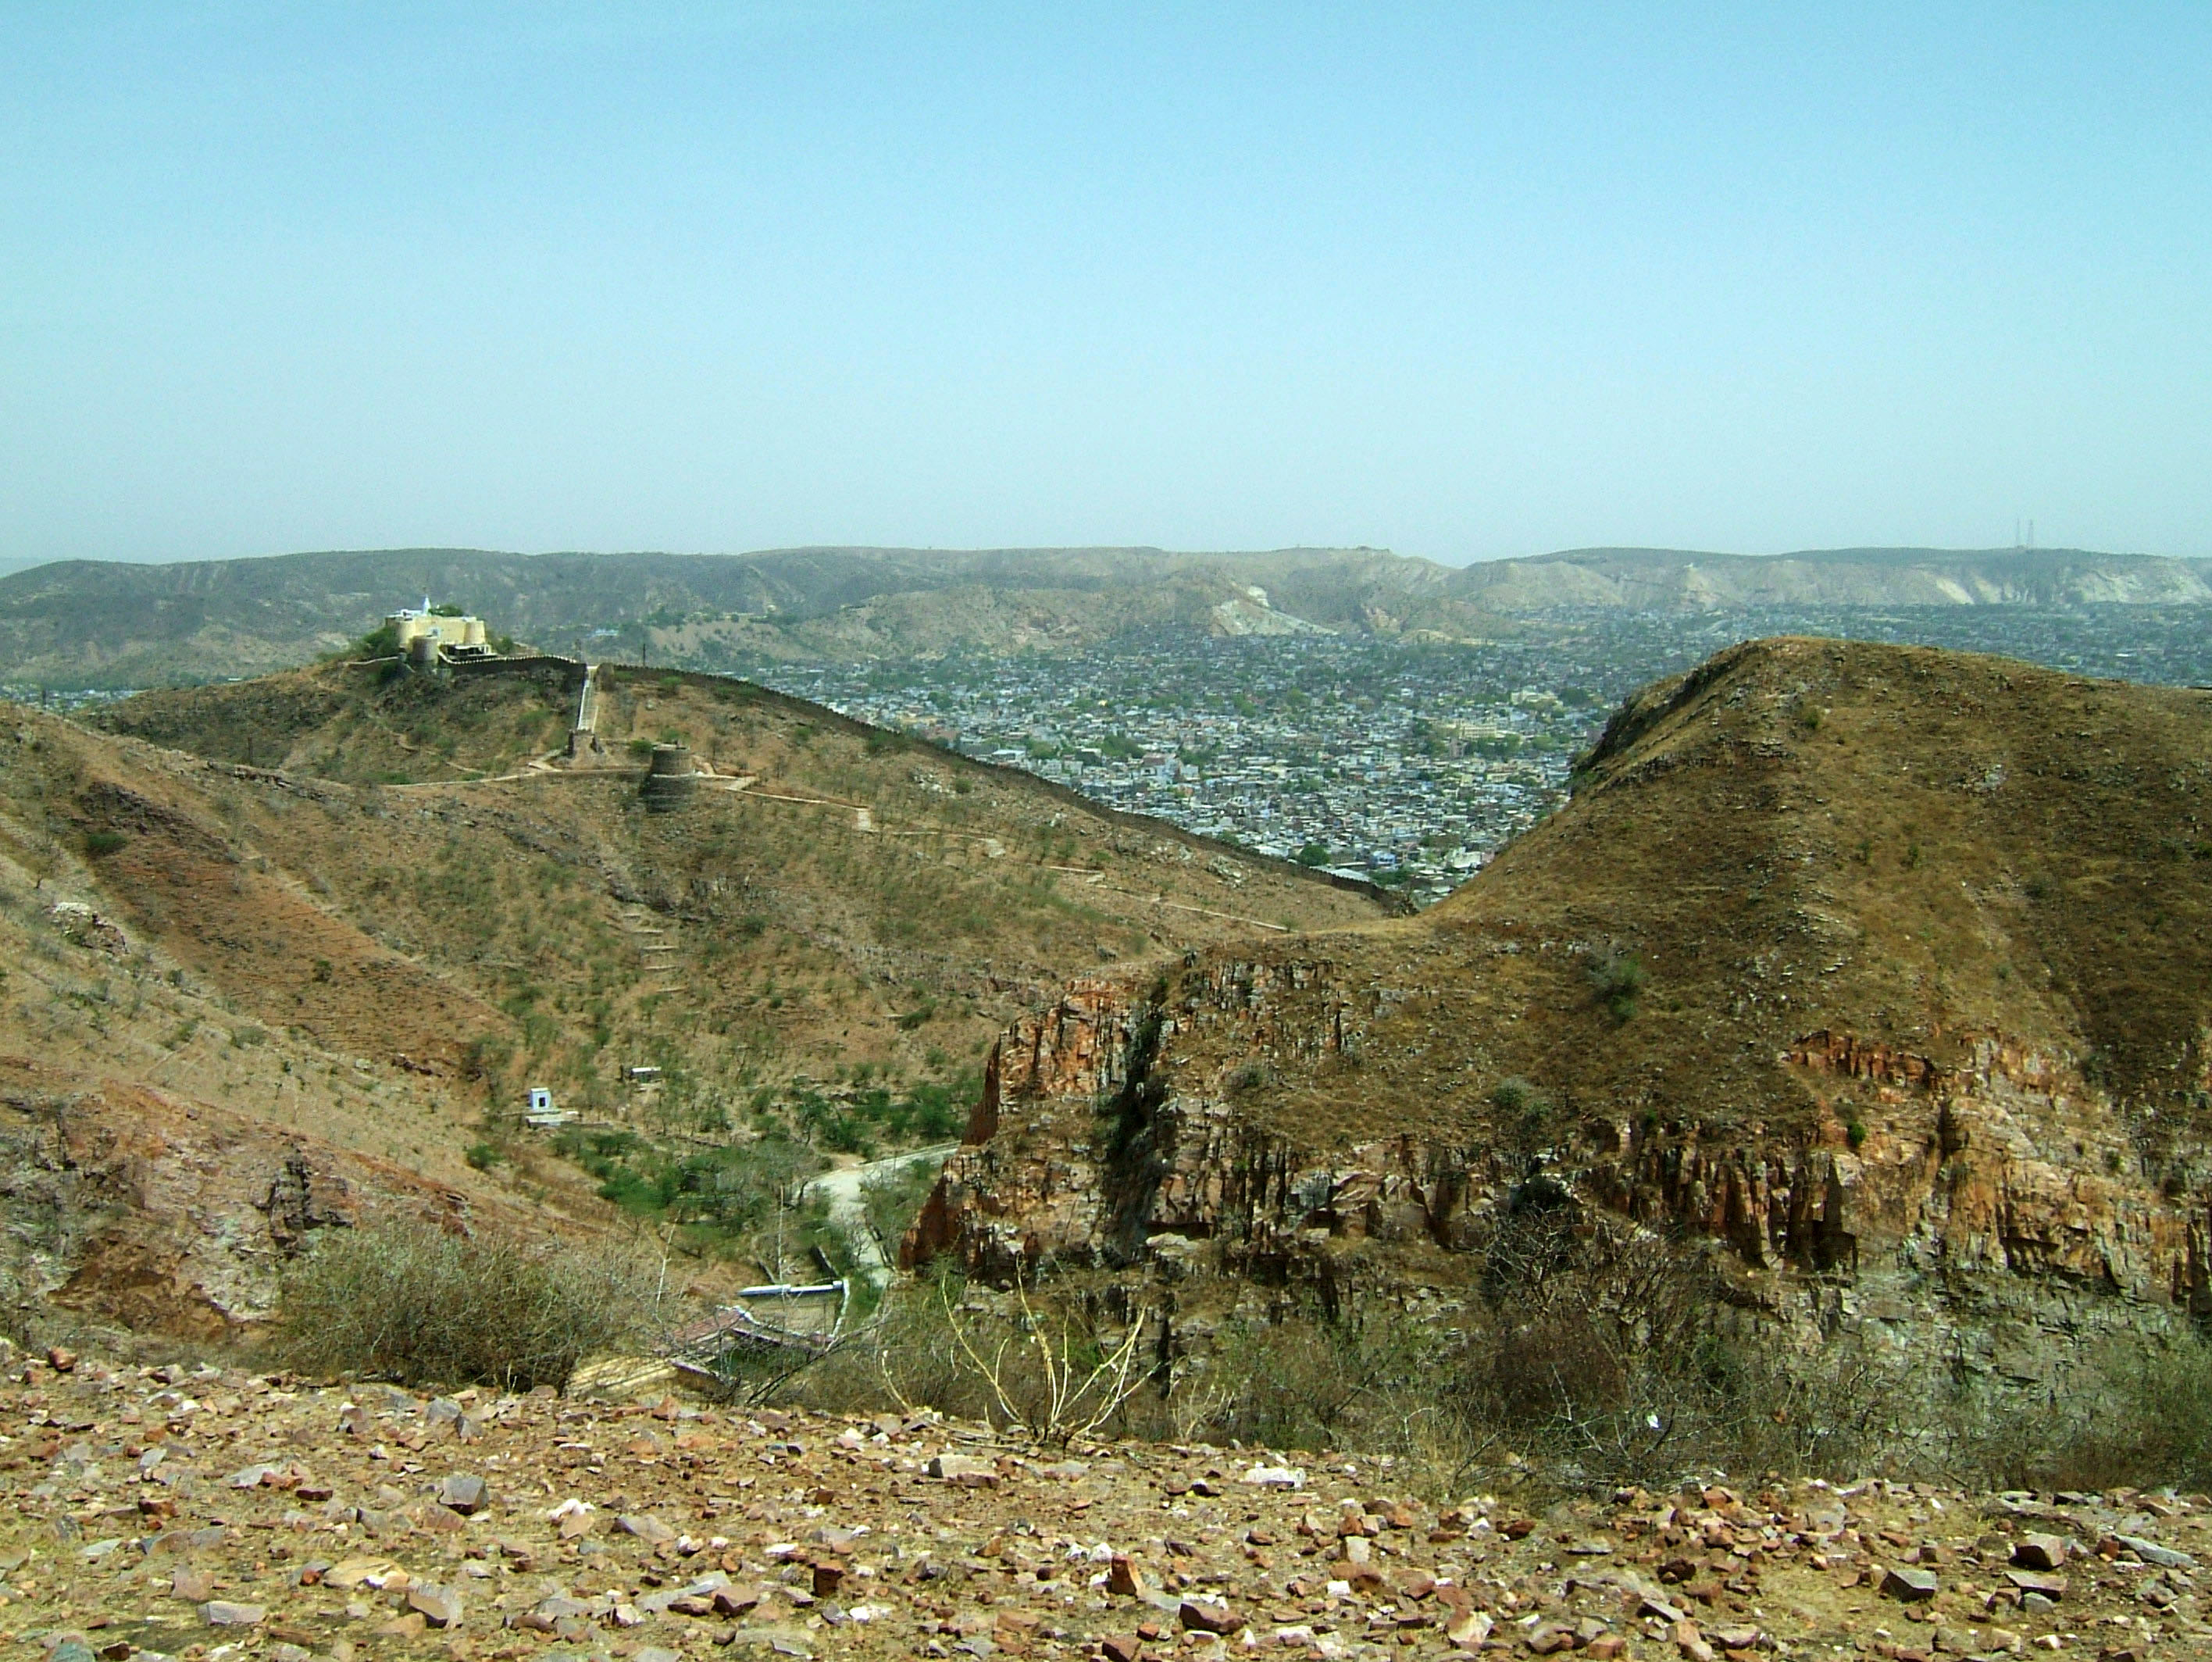 Nahargarh Fort Aravalli Hills overlooking city of Jaipur India Apr 2004 10